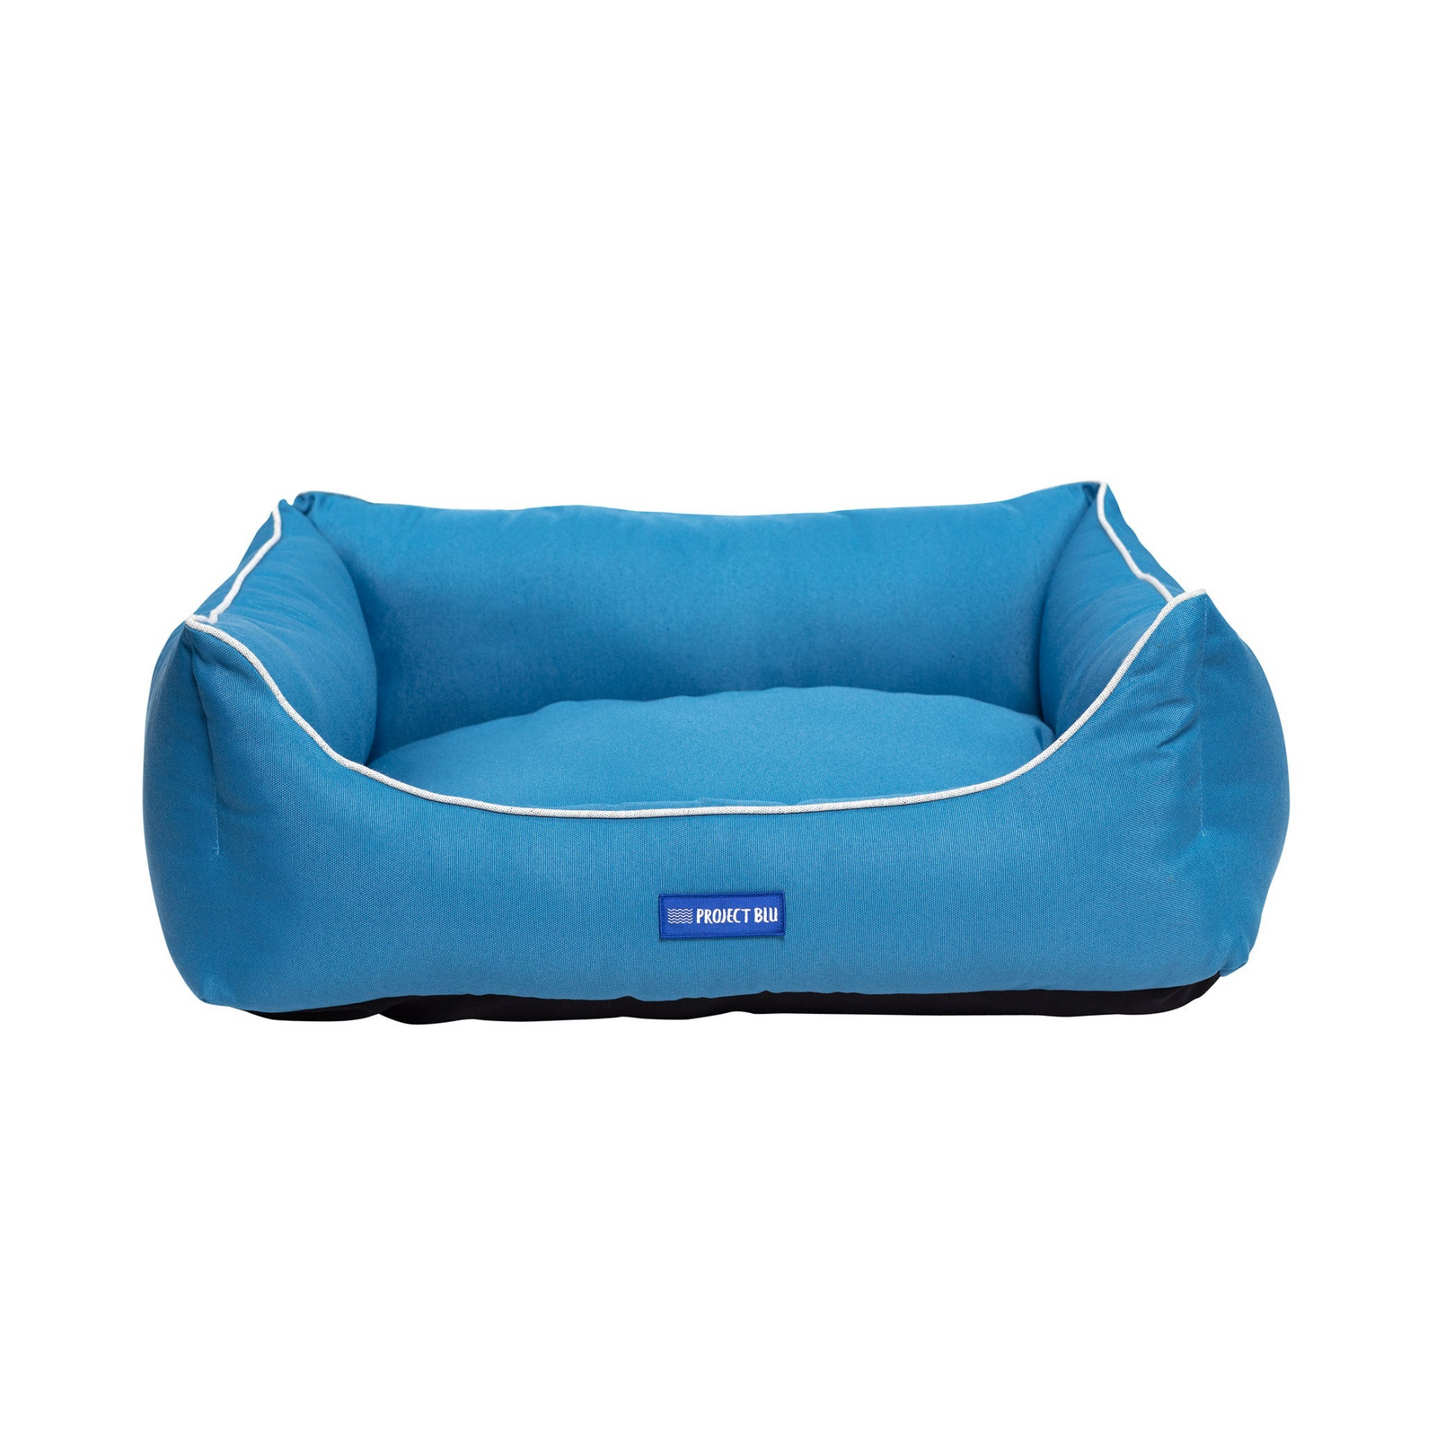 Marlin Eco-Fabric Bolster Dog Bed - Stylish and Eco-friendly